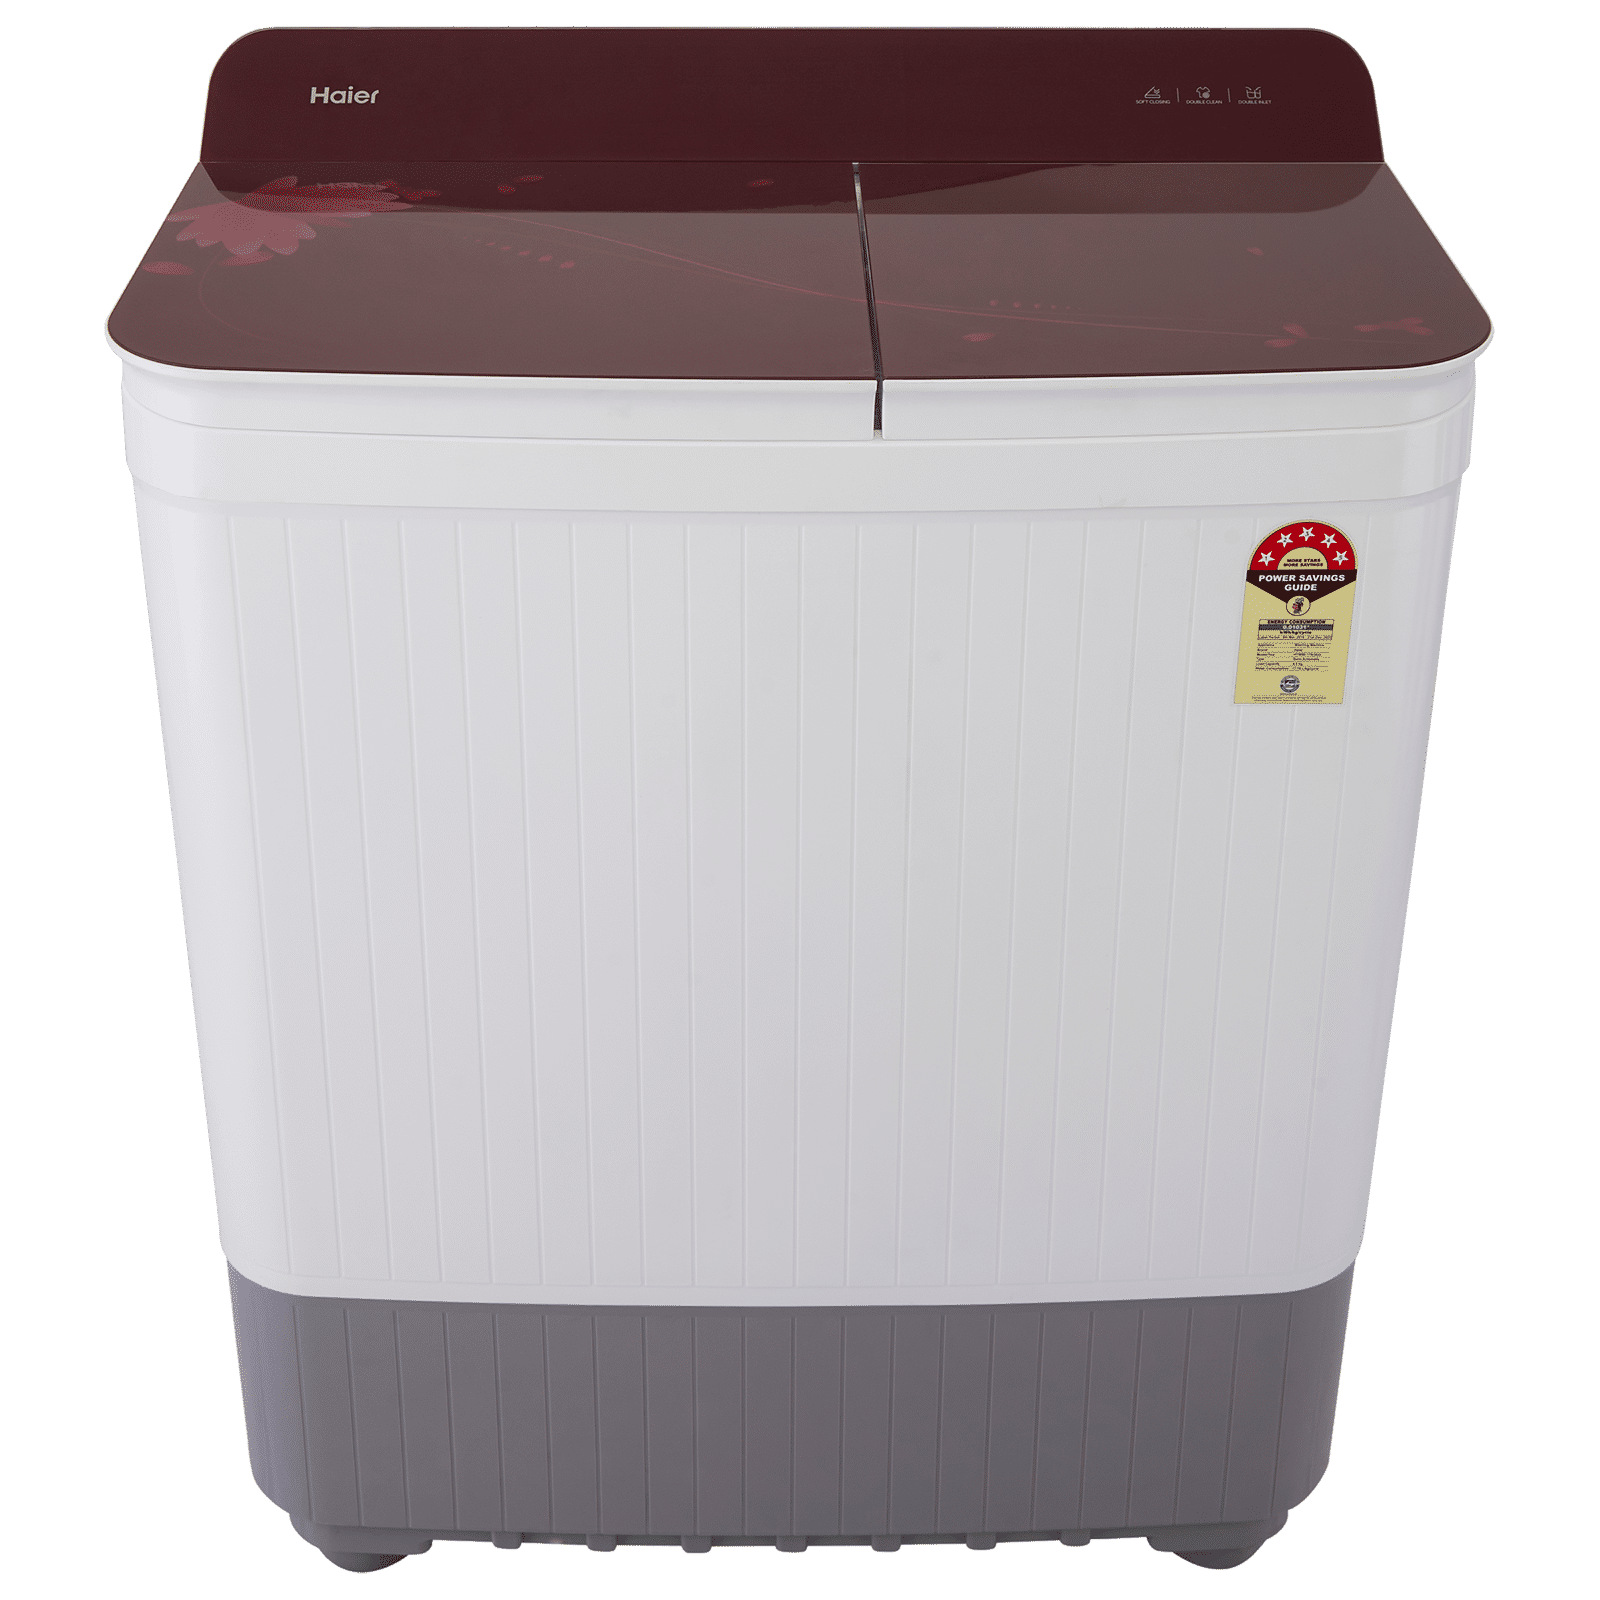 Buy Haier 8 kg 5 Star Semi Automatic Washing Machine with Anti Bacterial Vortex Pulsator (178, HTW80-178, Burgundy with Flower) Online - Croma